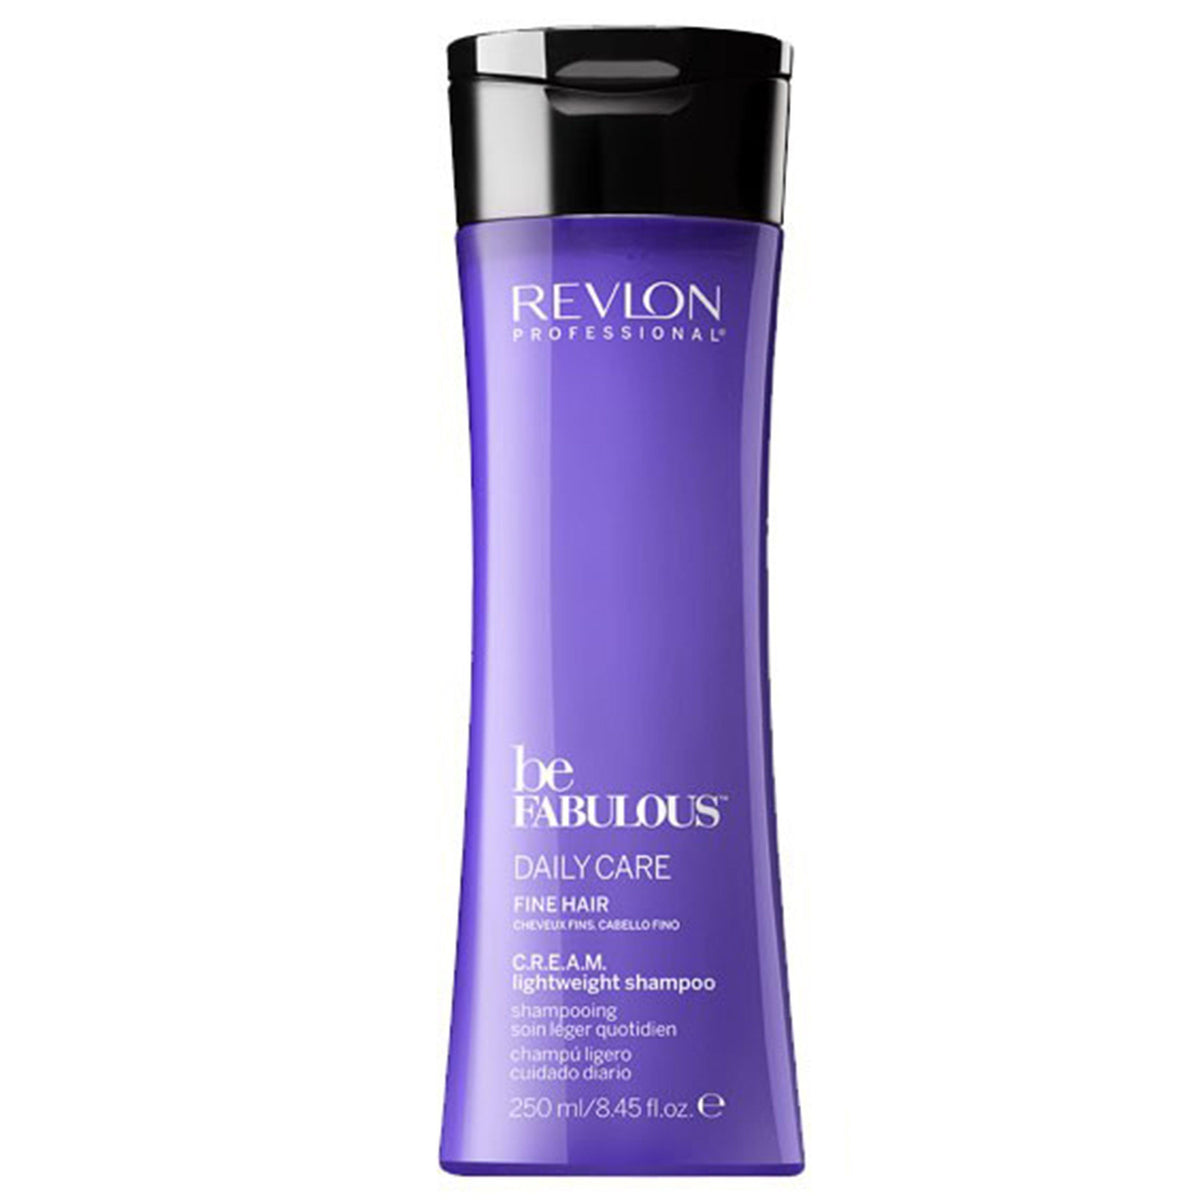 Revlon Professional Be Fabulous Daily Care Lightweight Shampoo 250ml